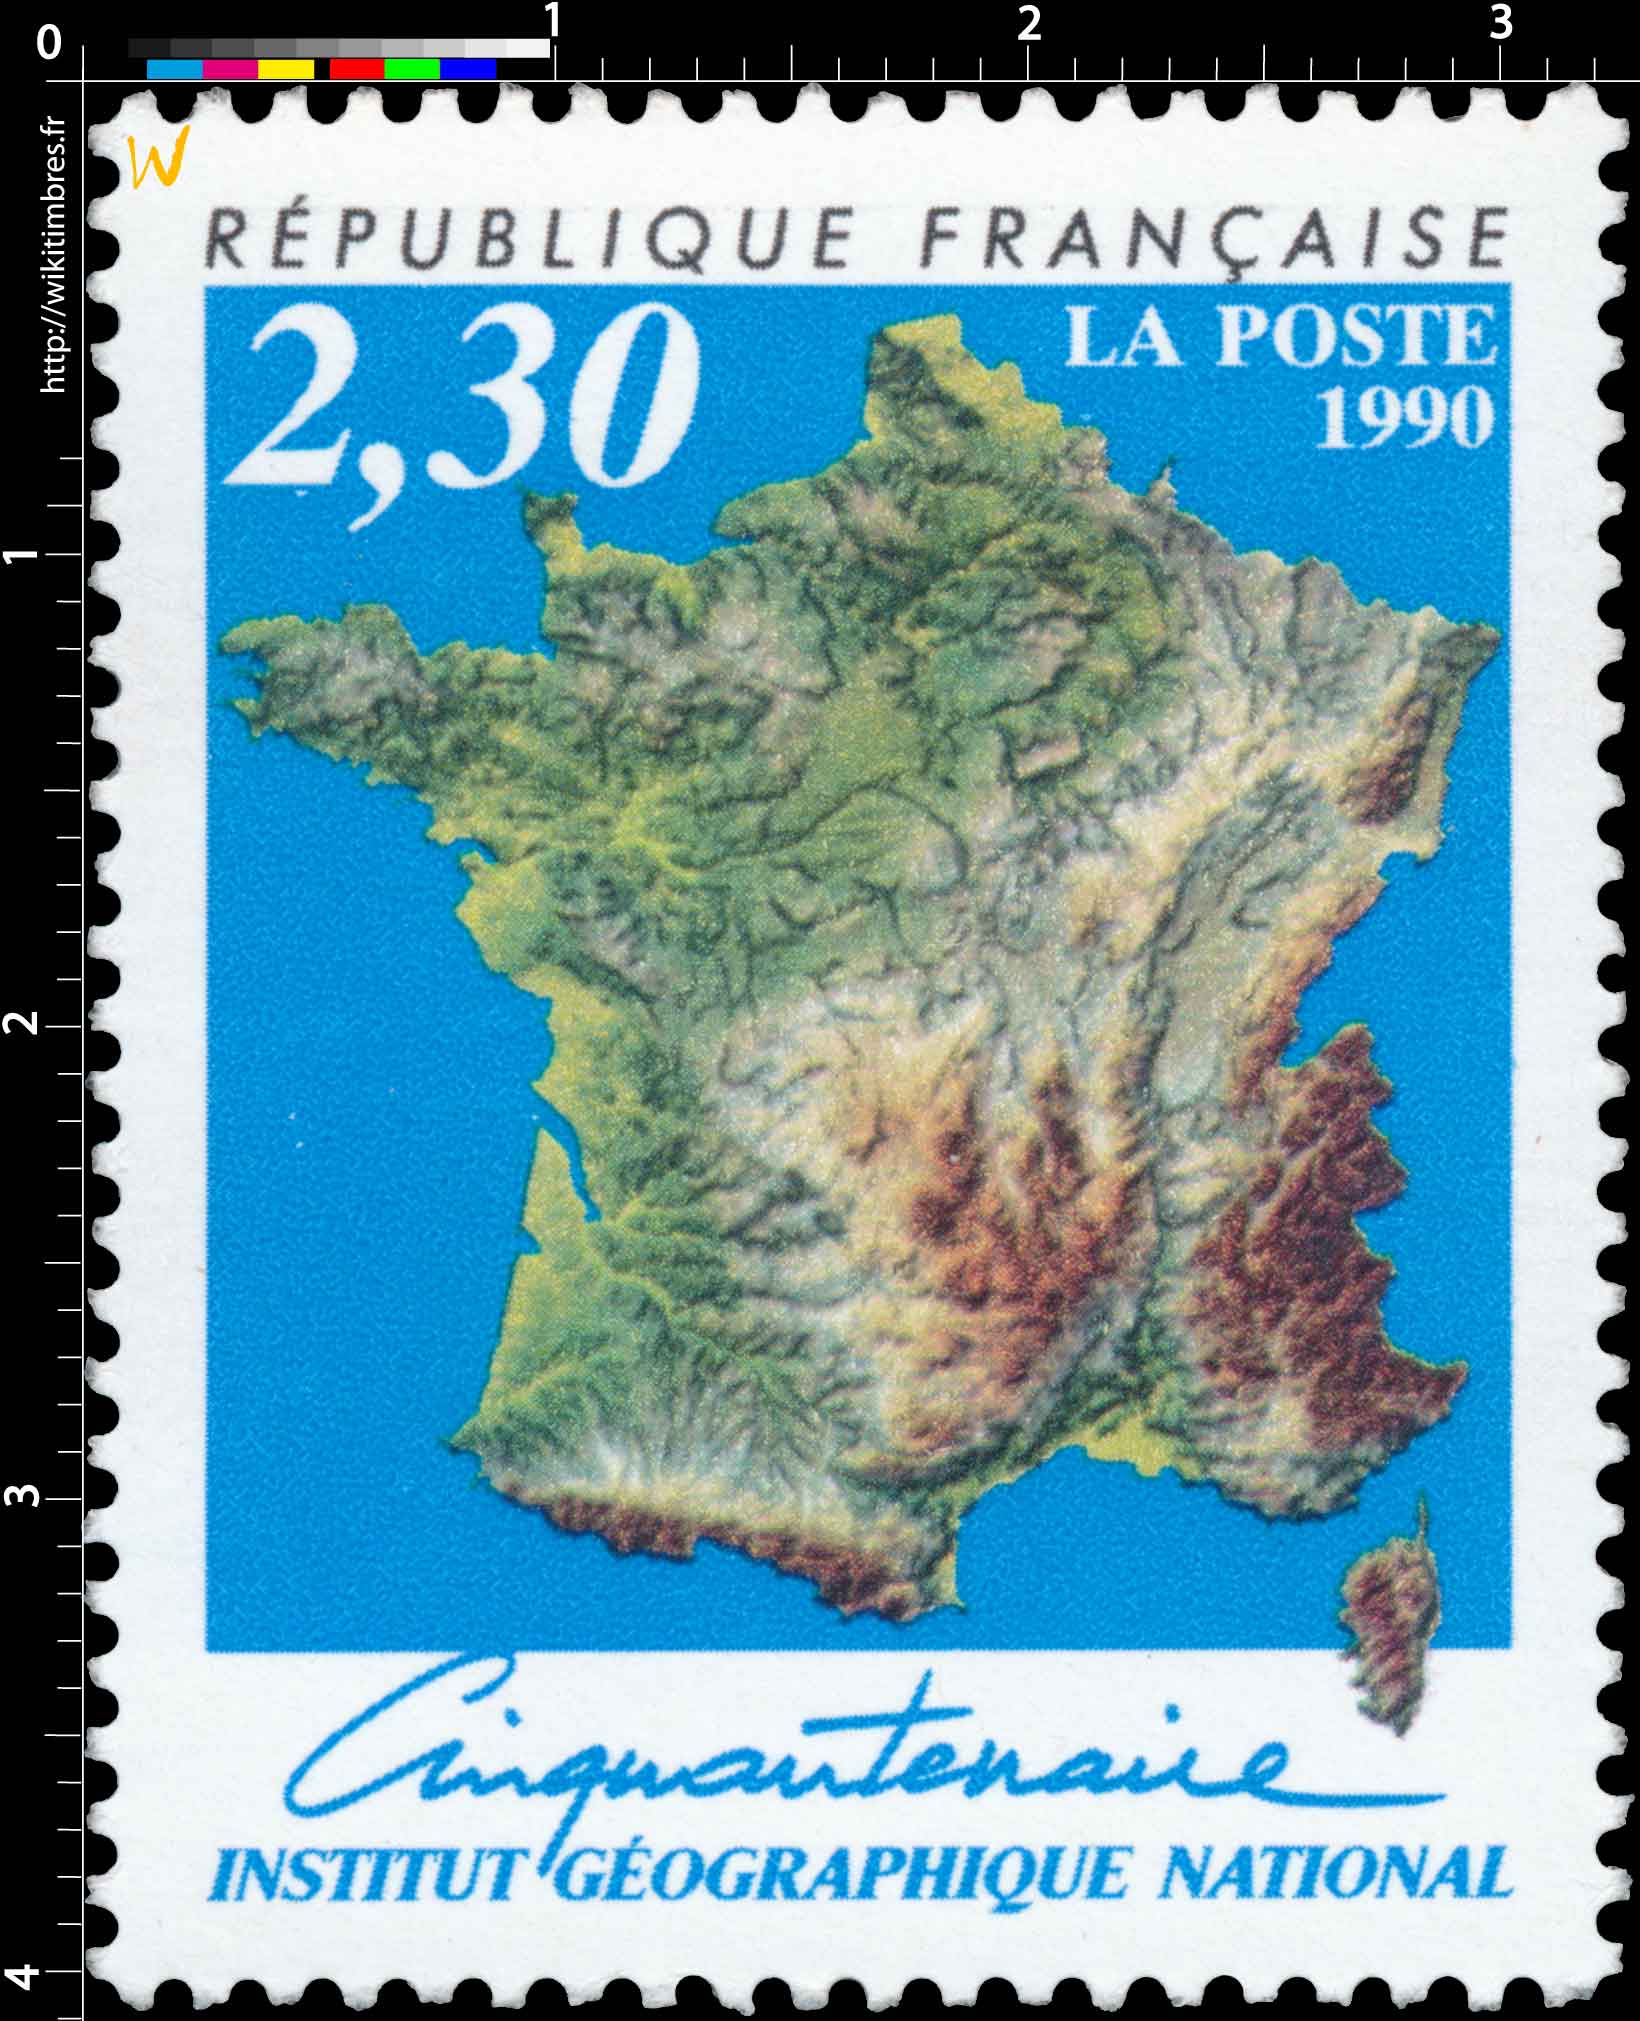 1990 Cinquantenaire INSTITUT GÉOGRAPHIQUE NATIONAL